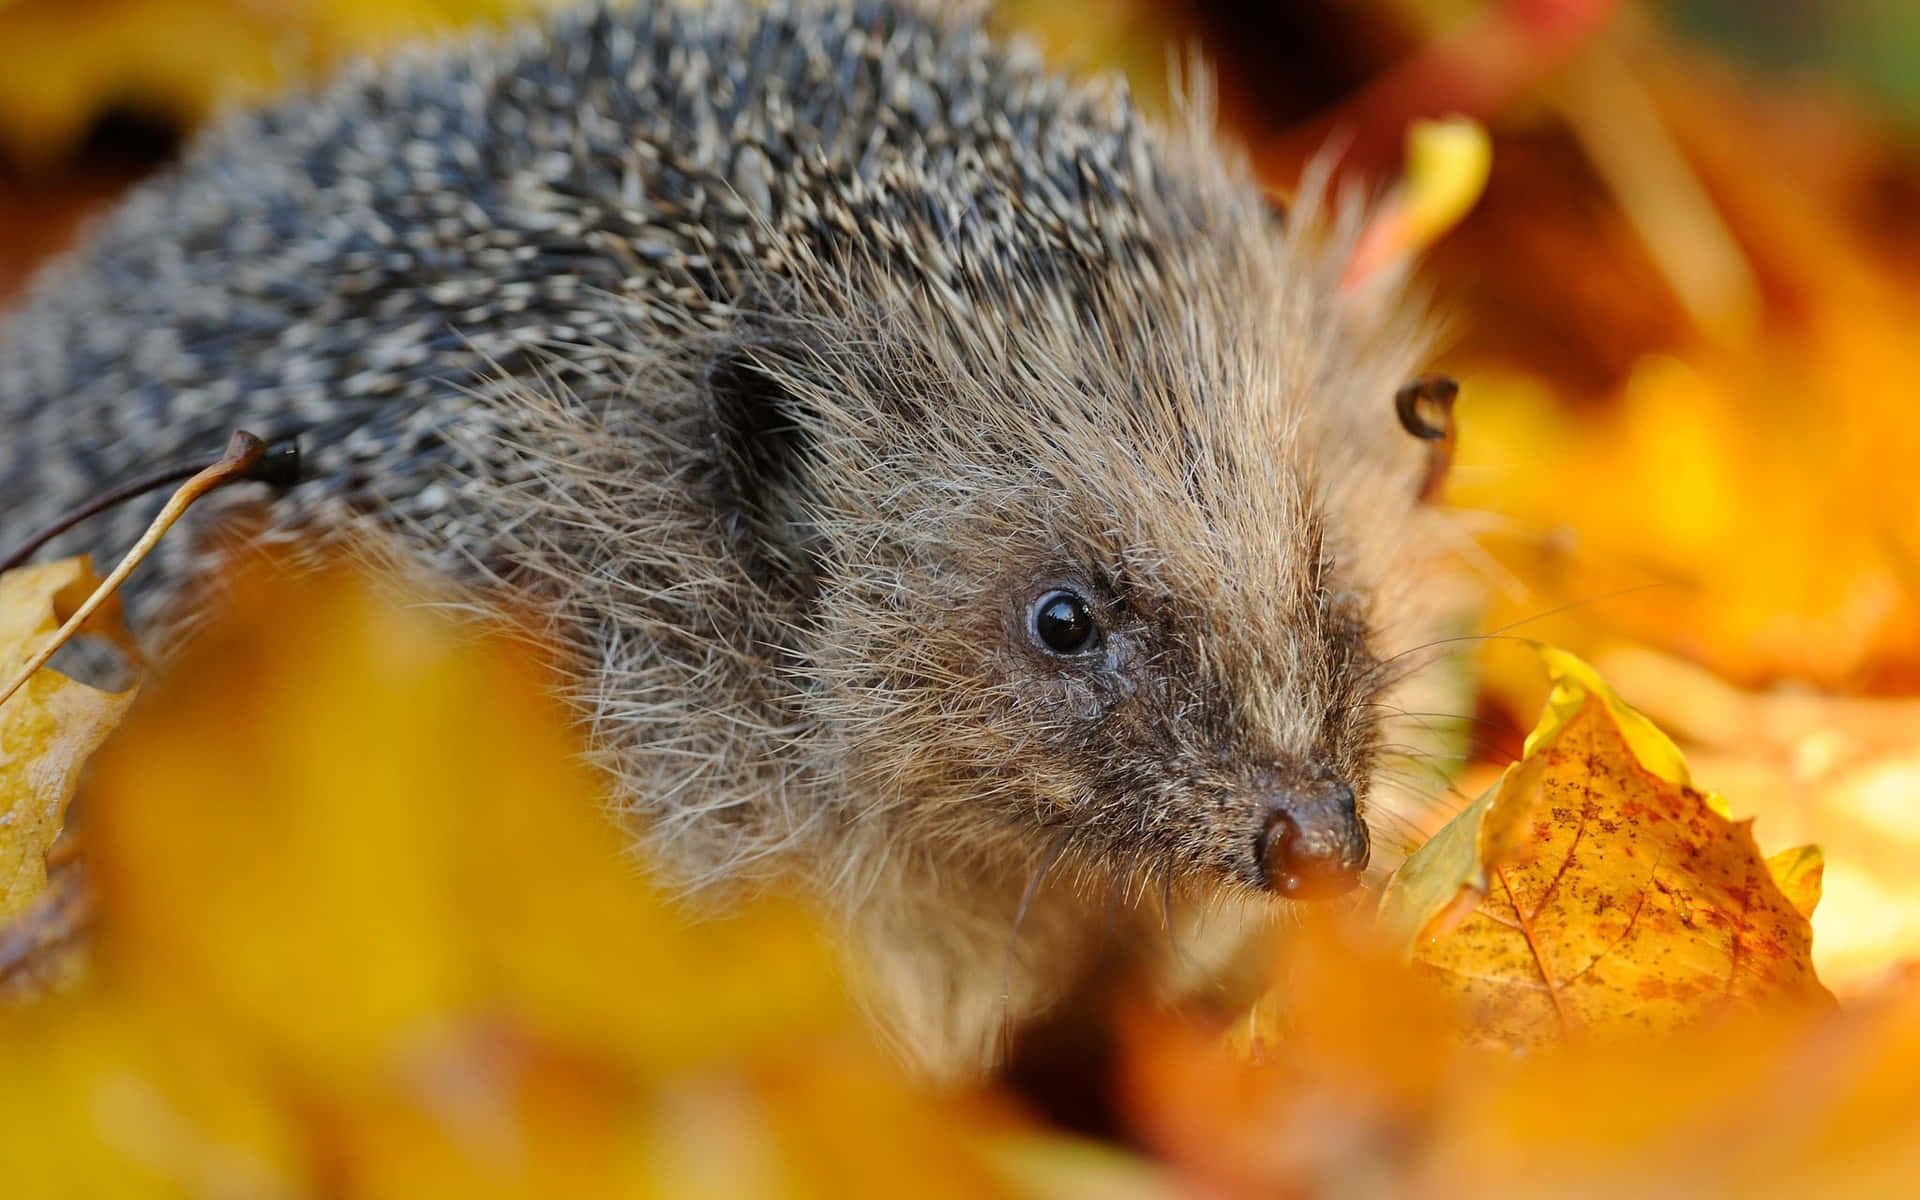 Daurian Hedgehog Autumn Aesthetic Picture